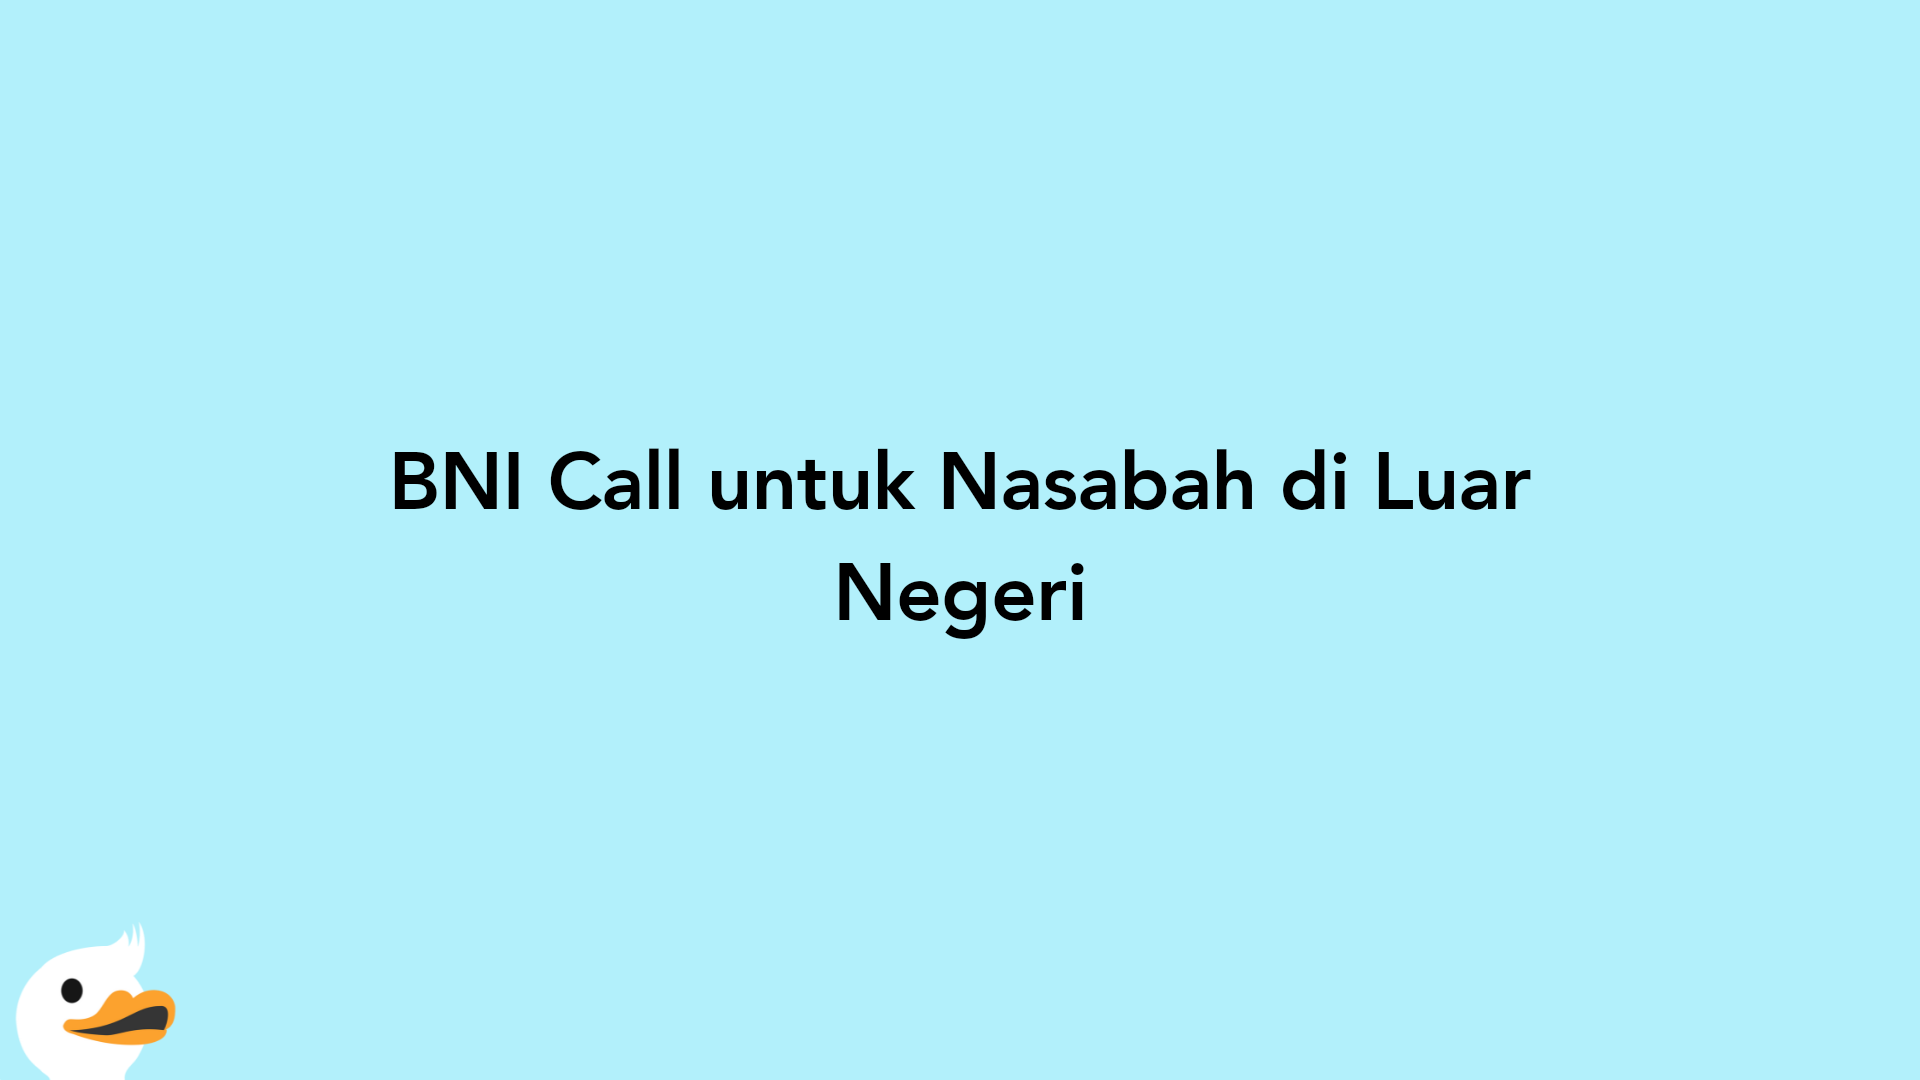 BNI Call untuk Nasabah di Luar Negeri